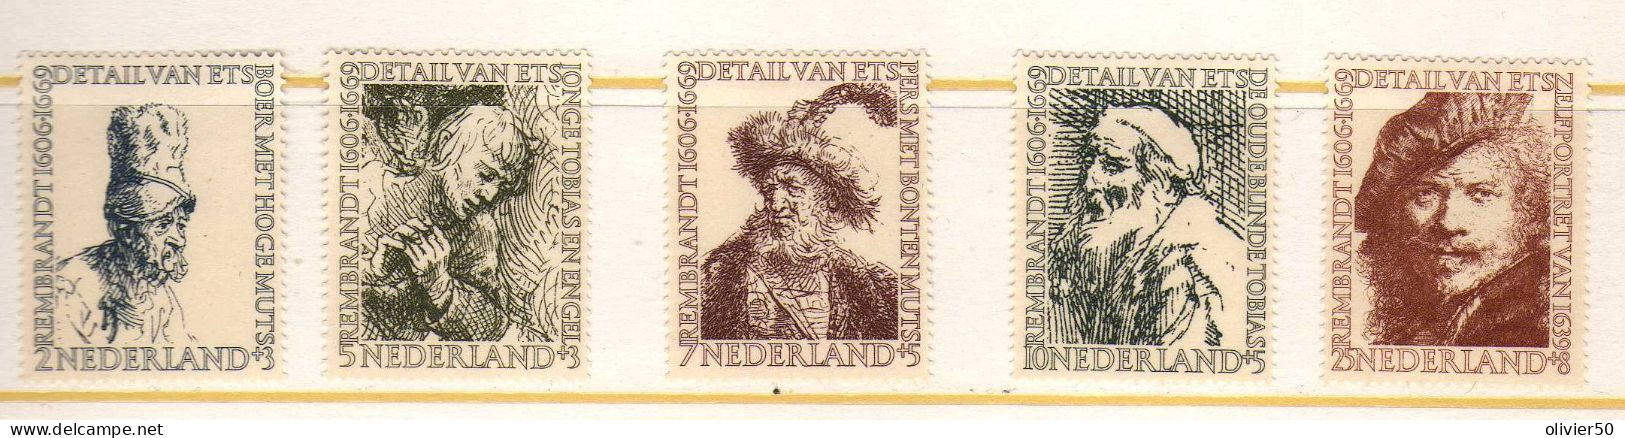 Pays-Bas -1956 - Rembrandt -  Neufs* - MLH - Neufs